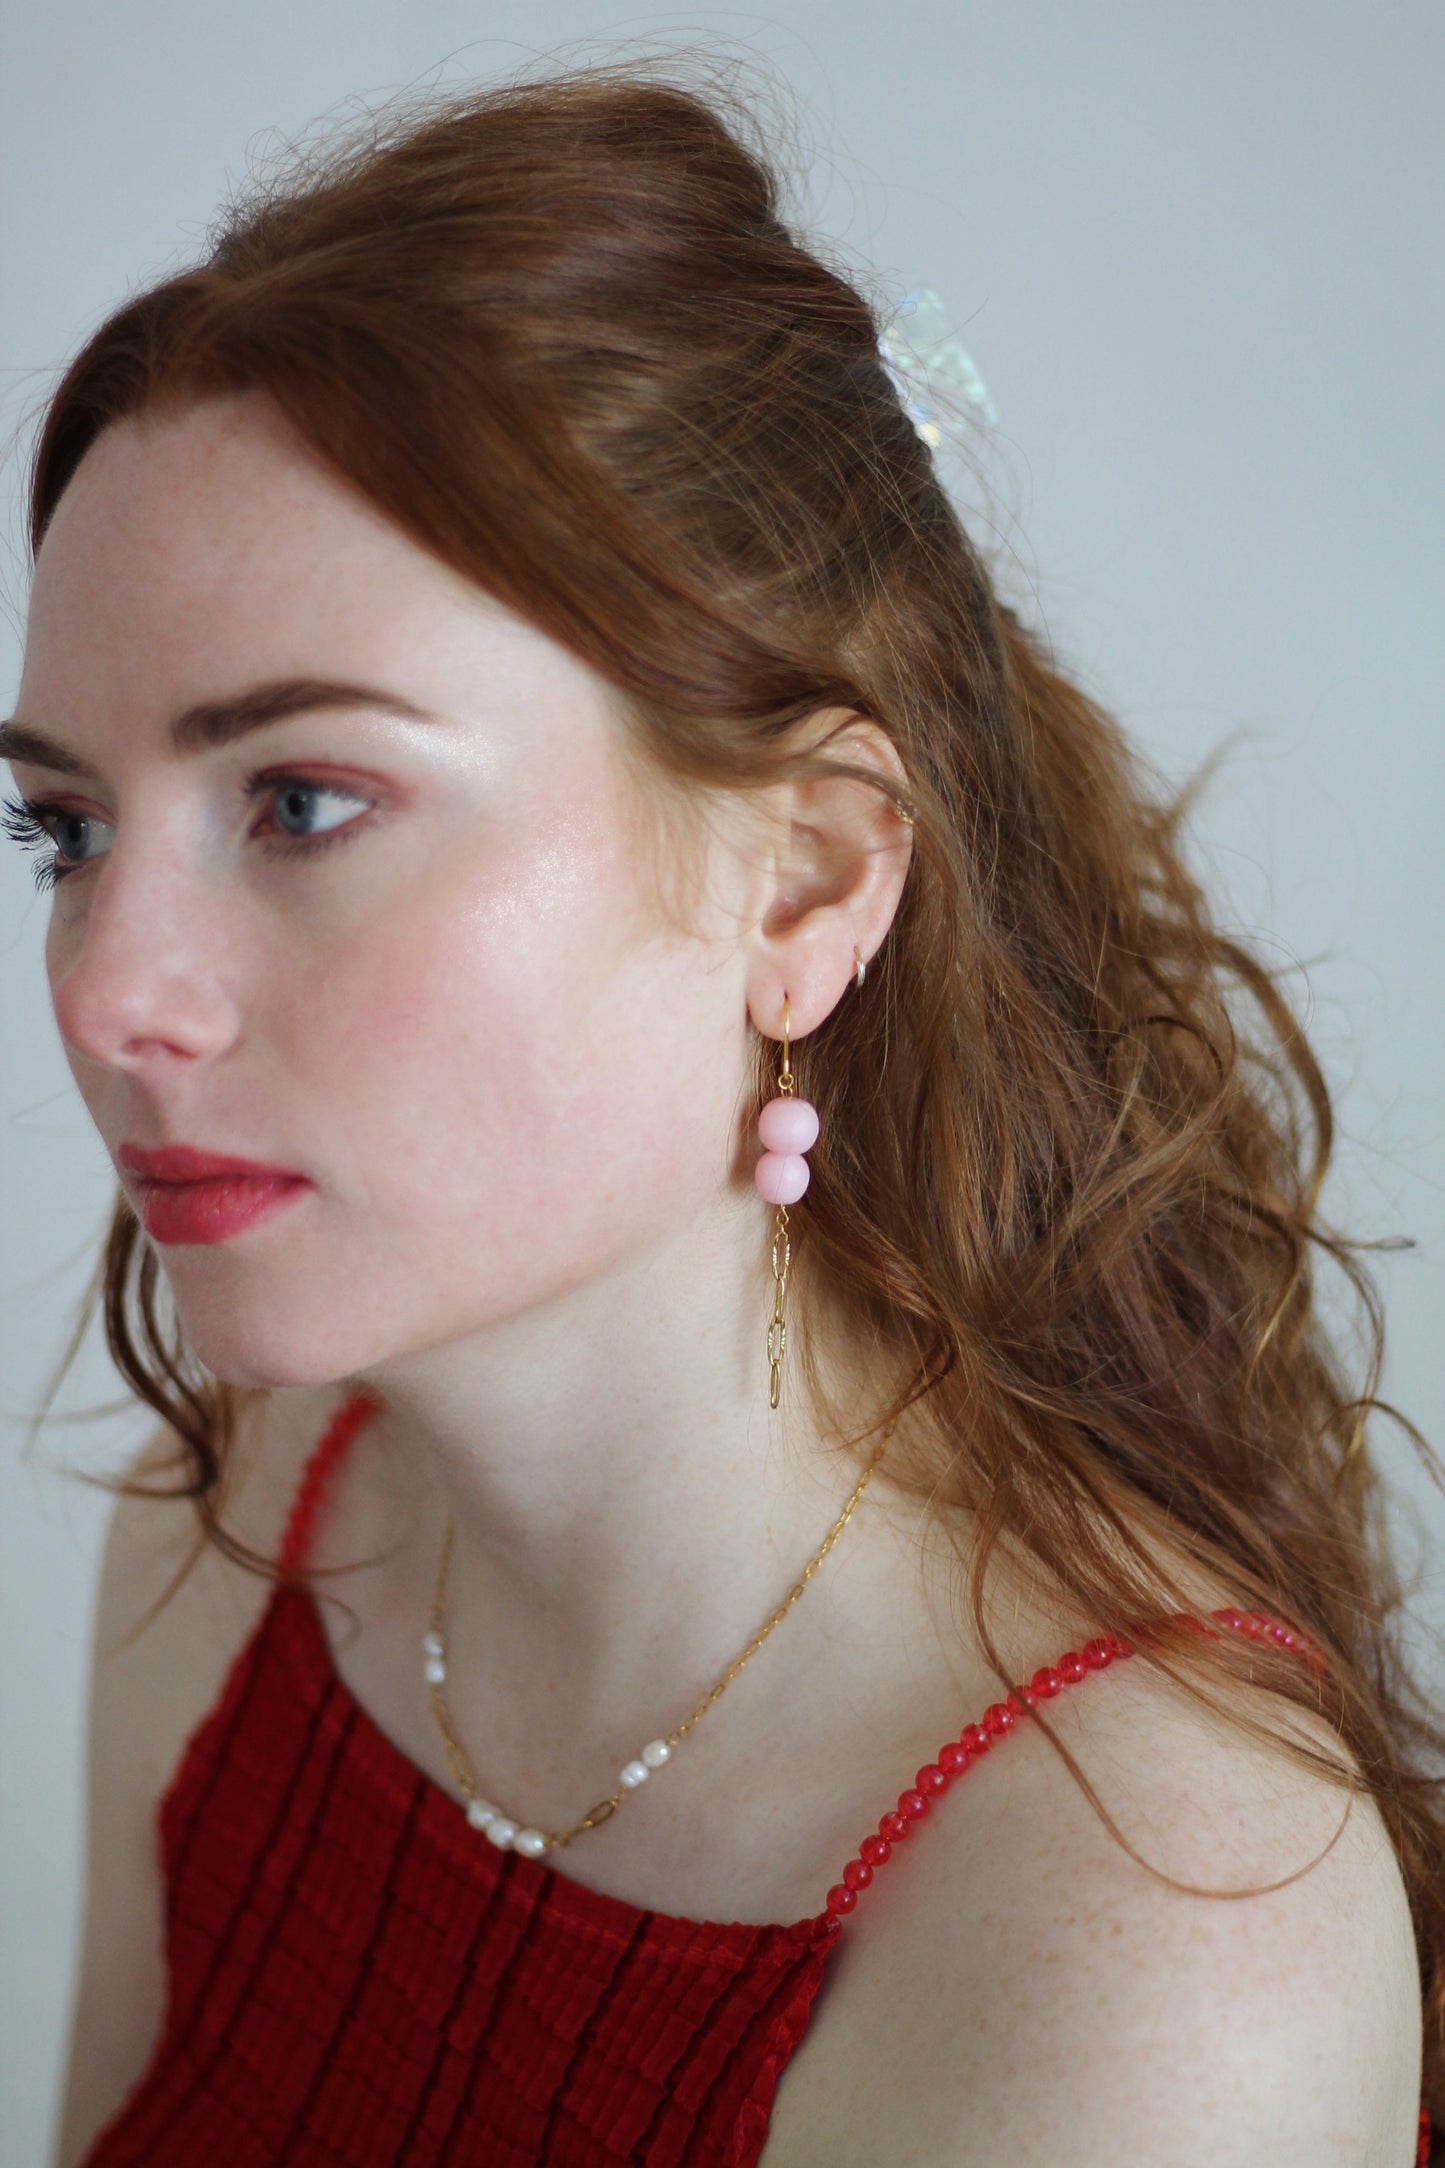 AVA bead earrings - Pastel pink